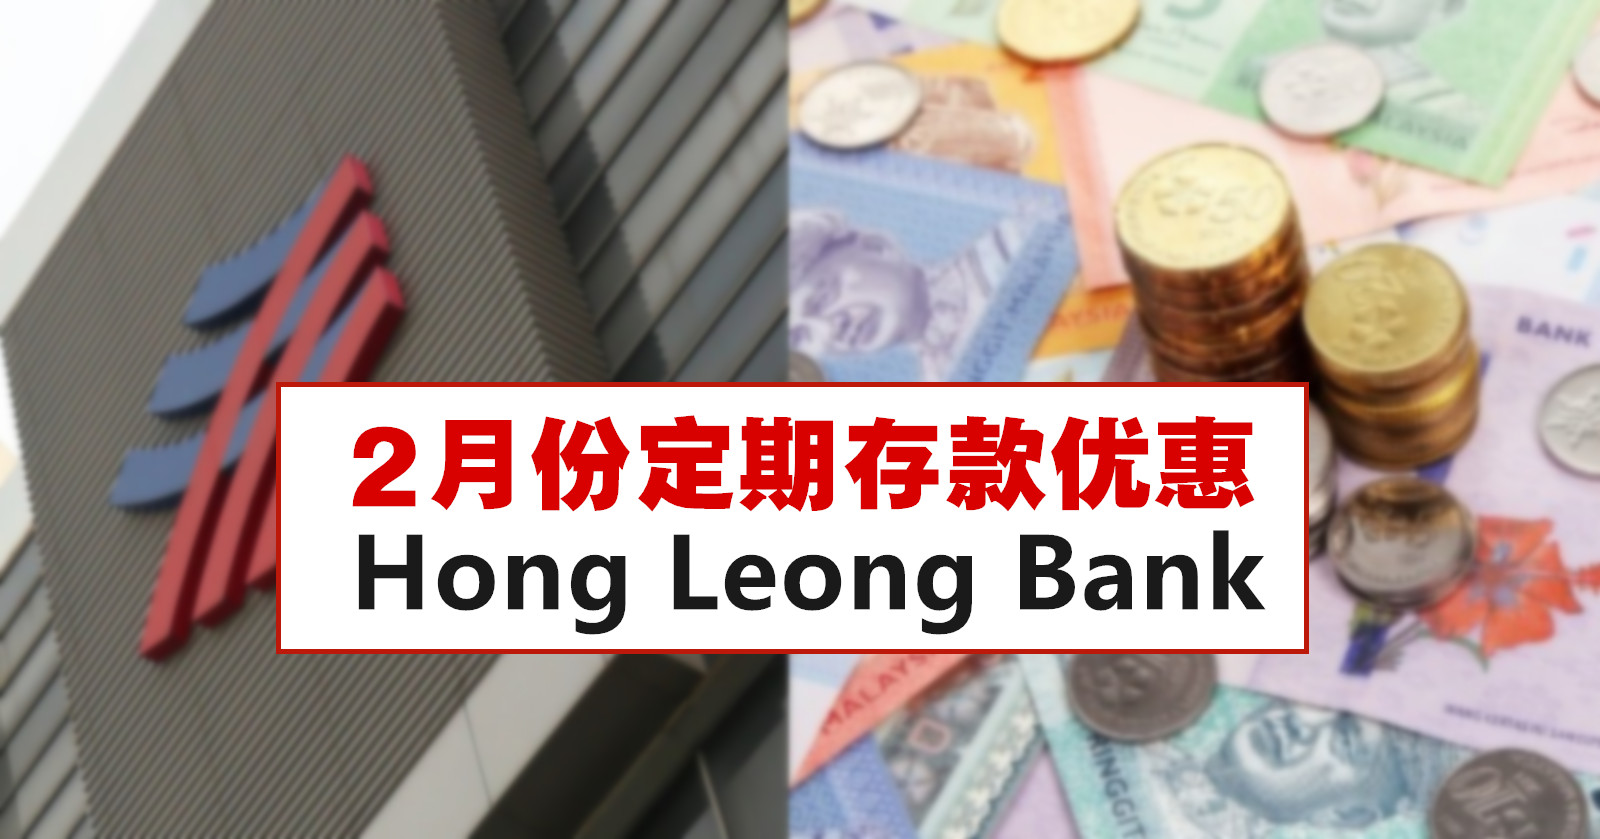 2月份Hong Leong Bank定期存款优惠 - WINRAYLAND